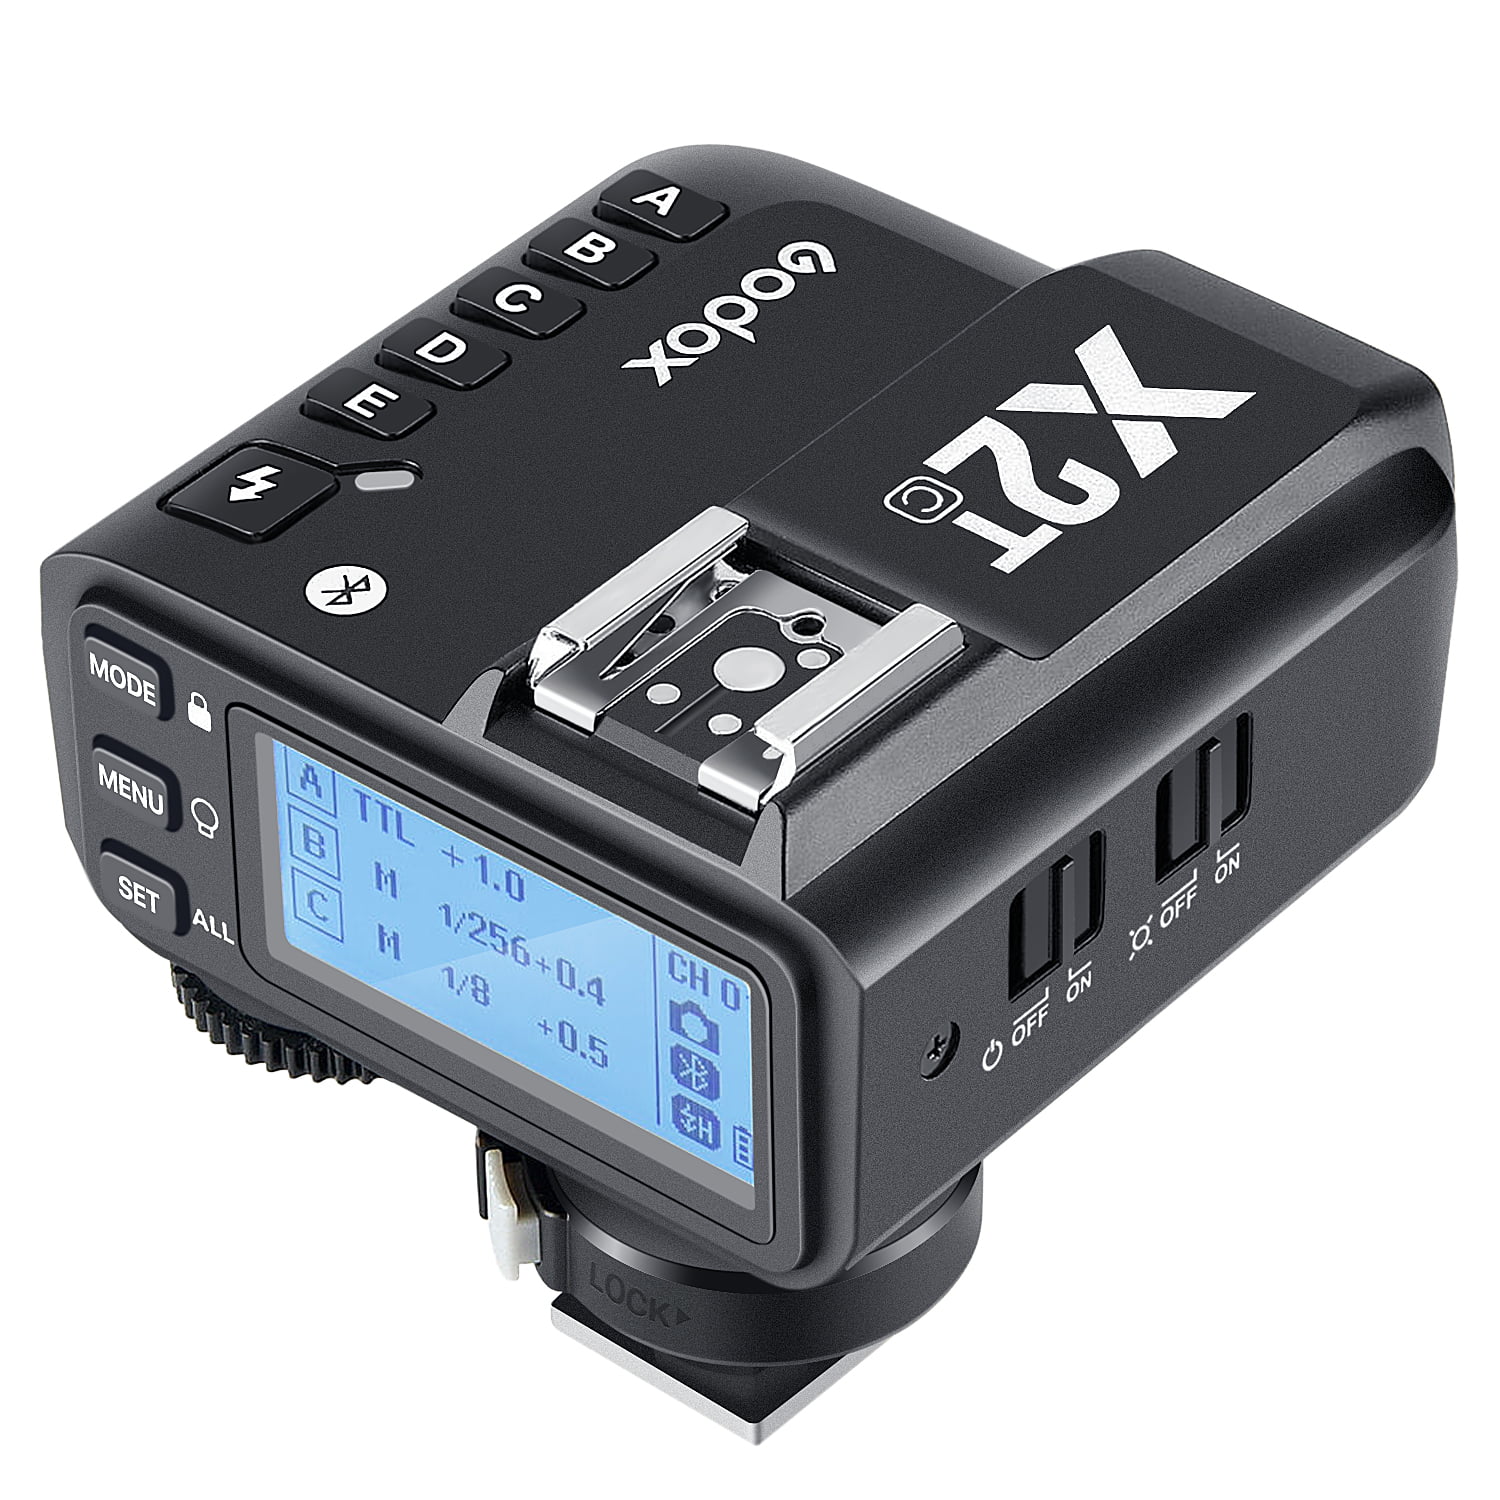 Godox 2 x TT600 2.4G Wireless Flash Speedlite with X2T-C TTL Flash Trigger Kit for Canon EOS 450D 550D 600D 650D 700D 750D 800D 1200D 1300D 